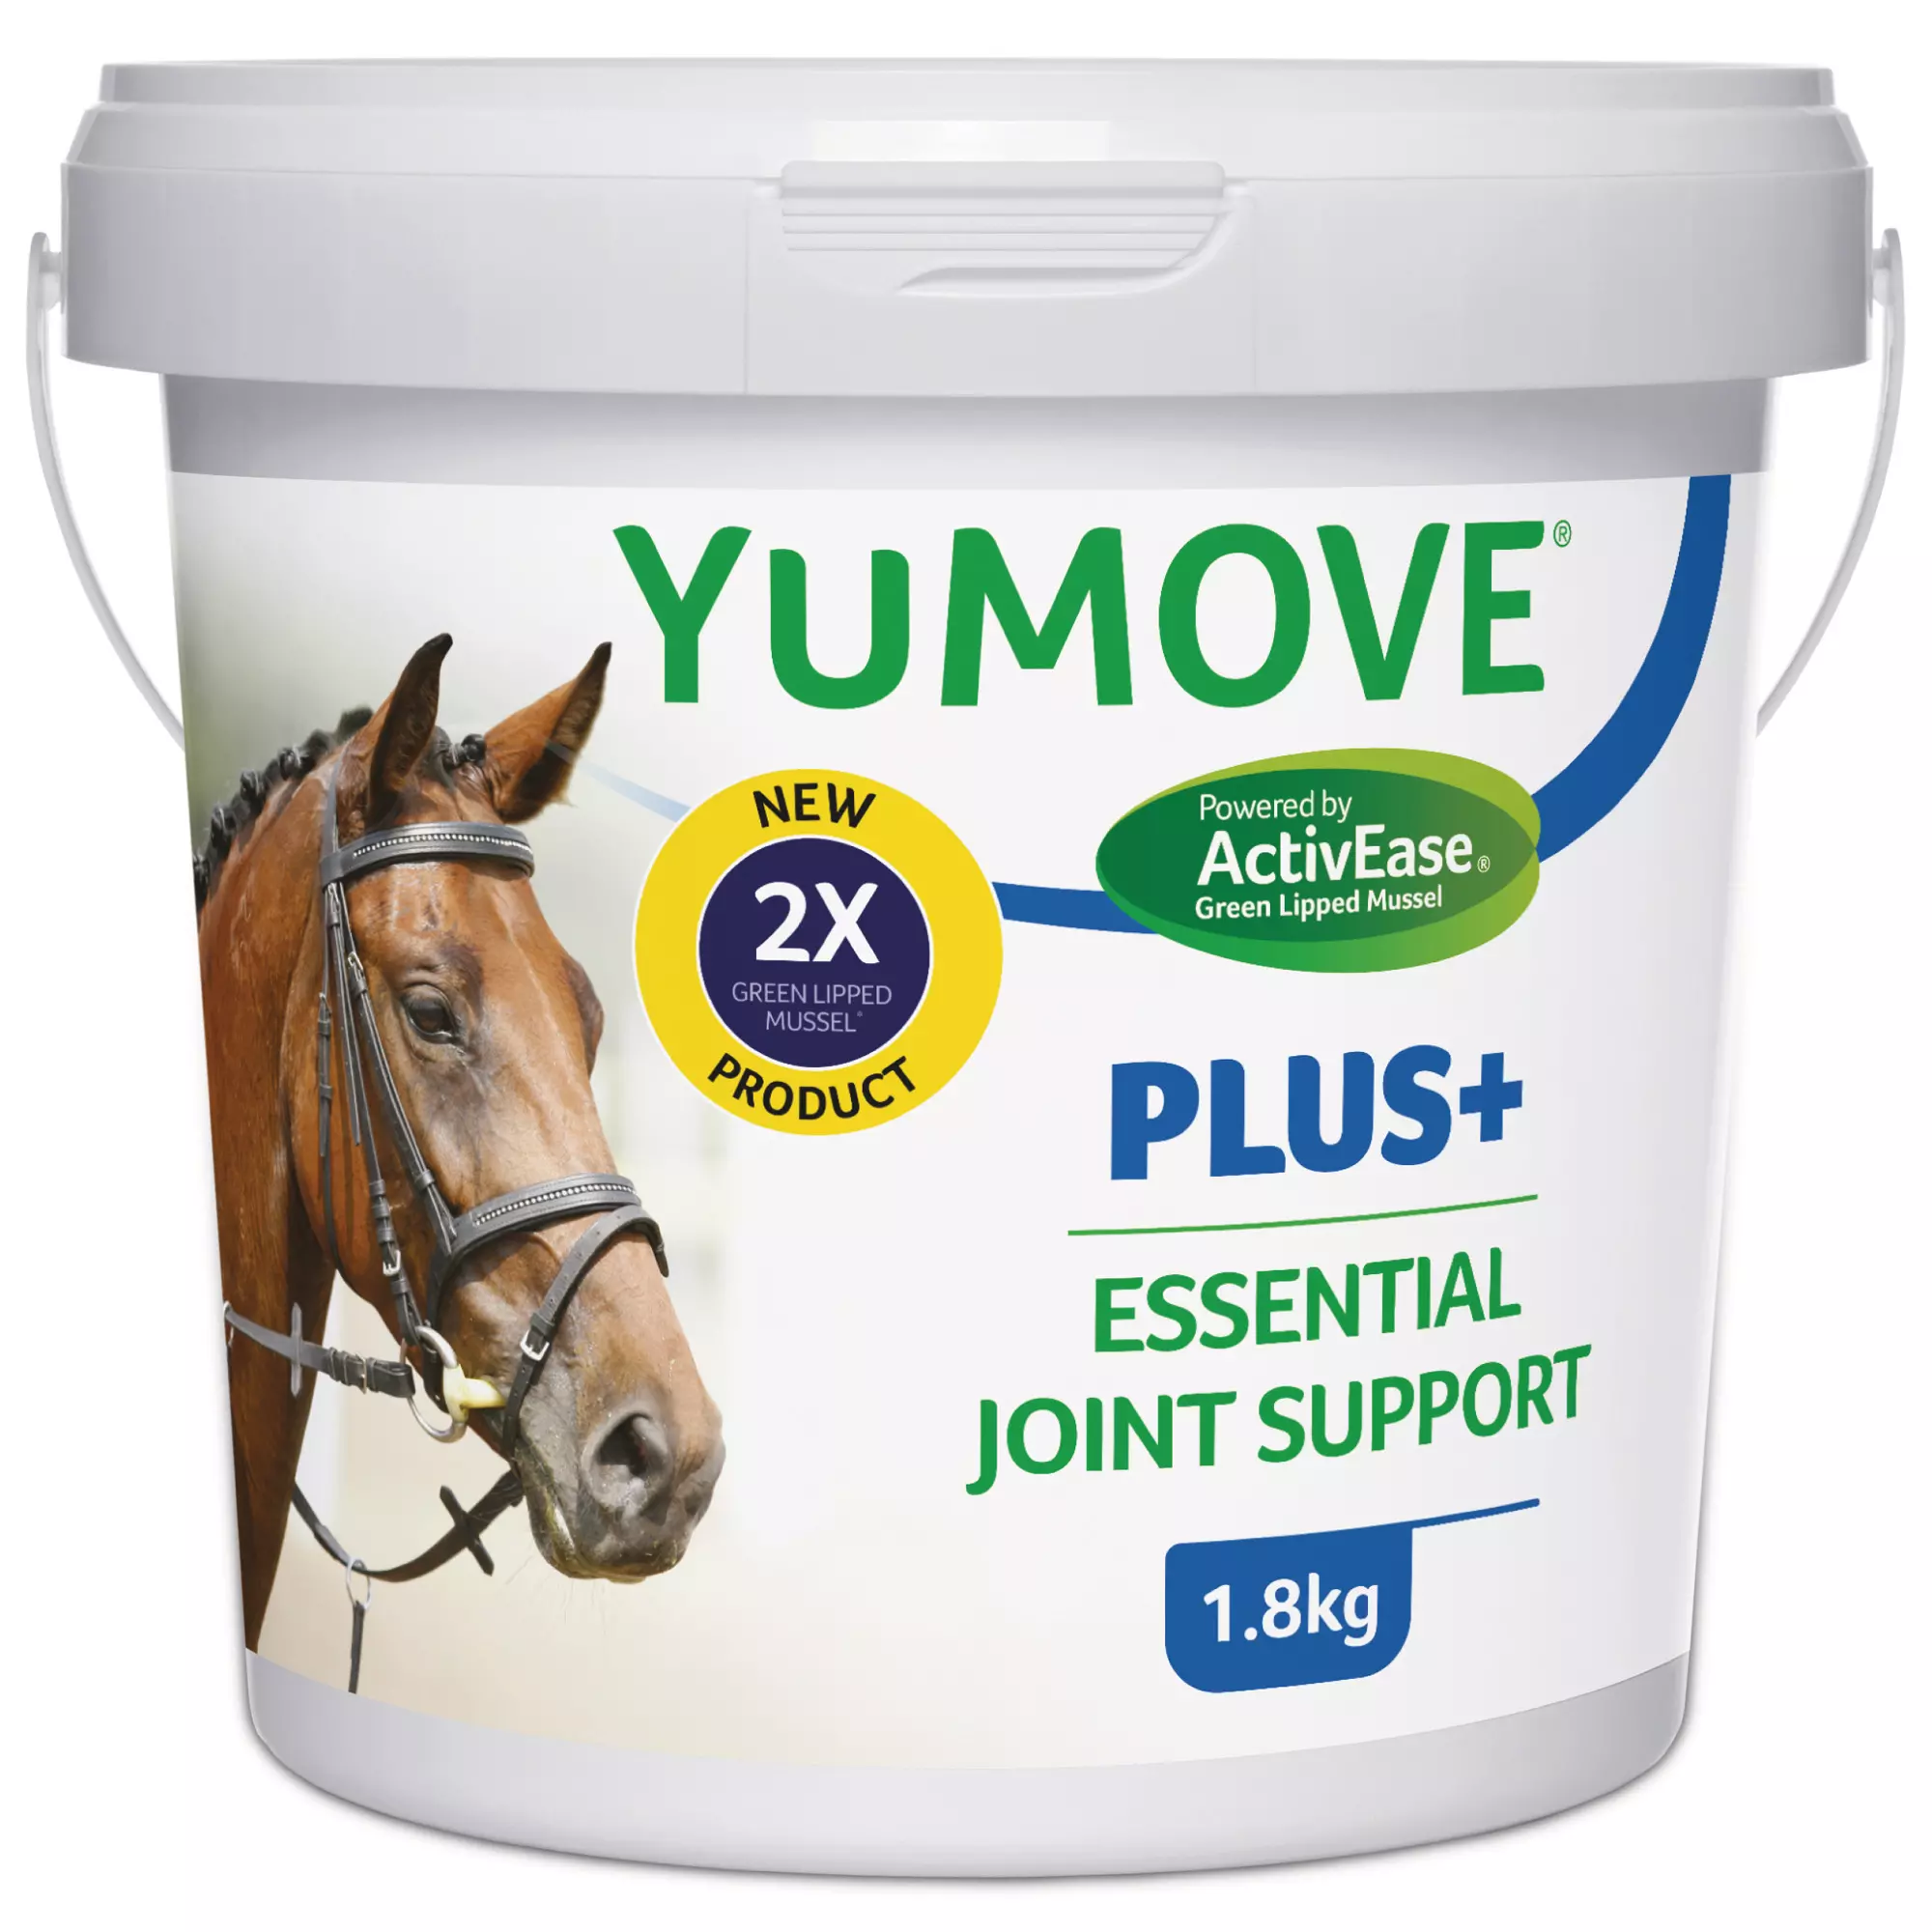 YuMove Plus Horse